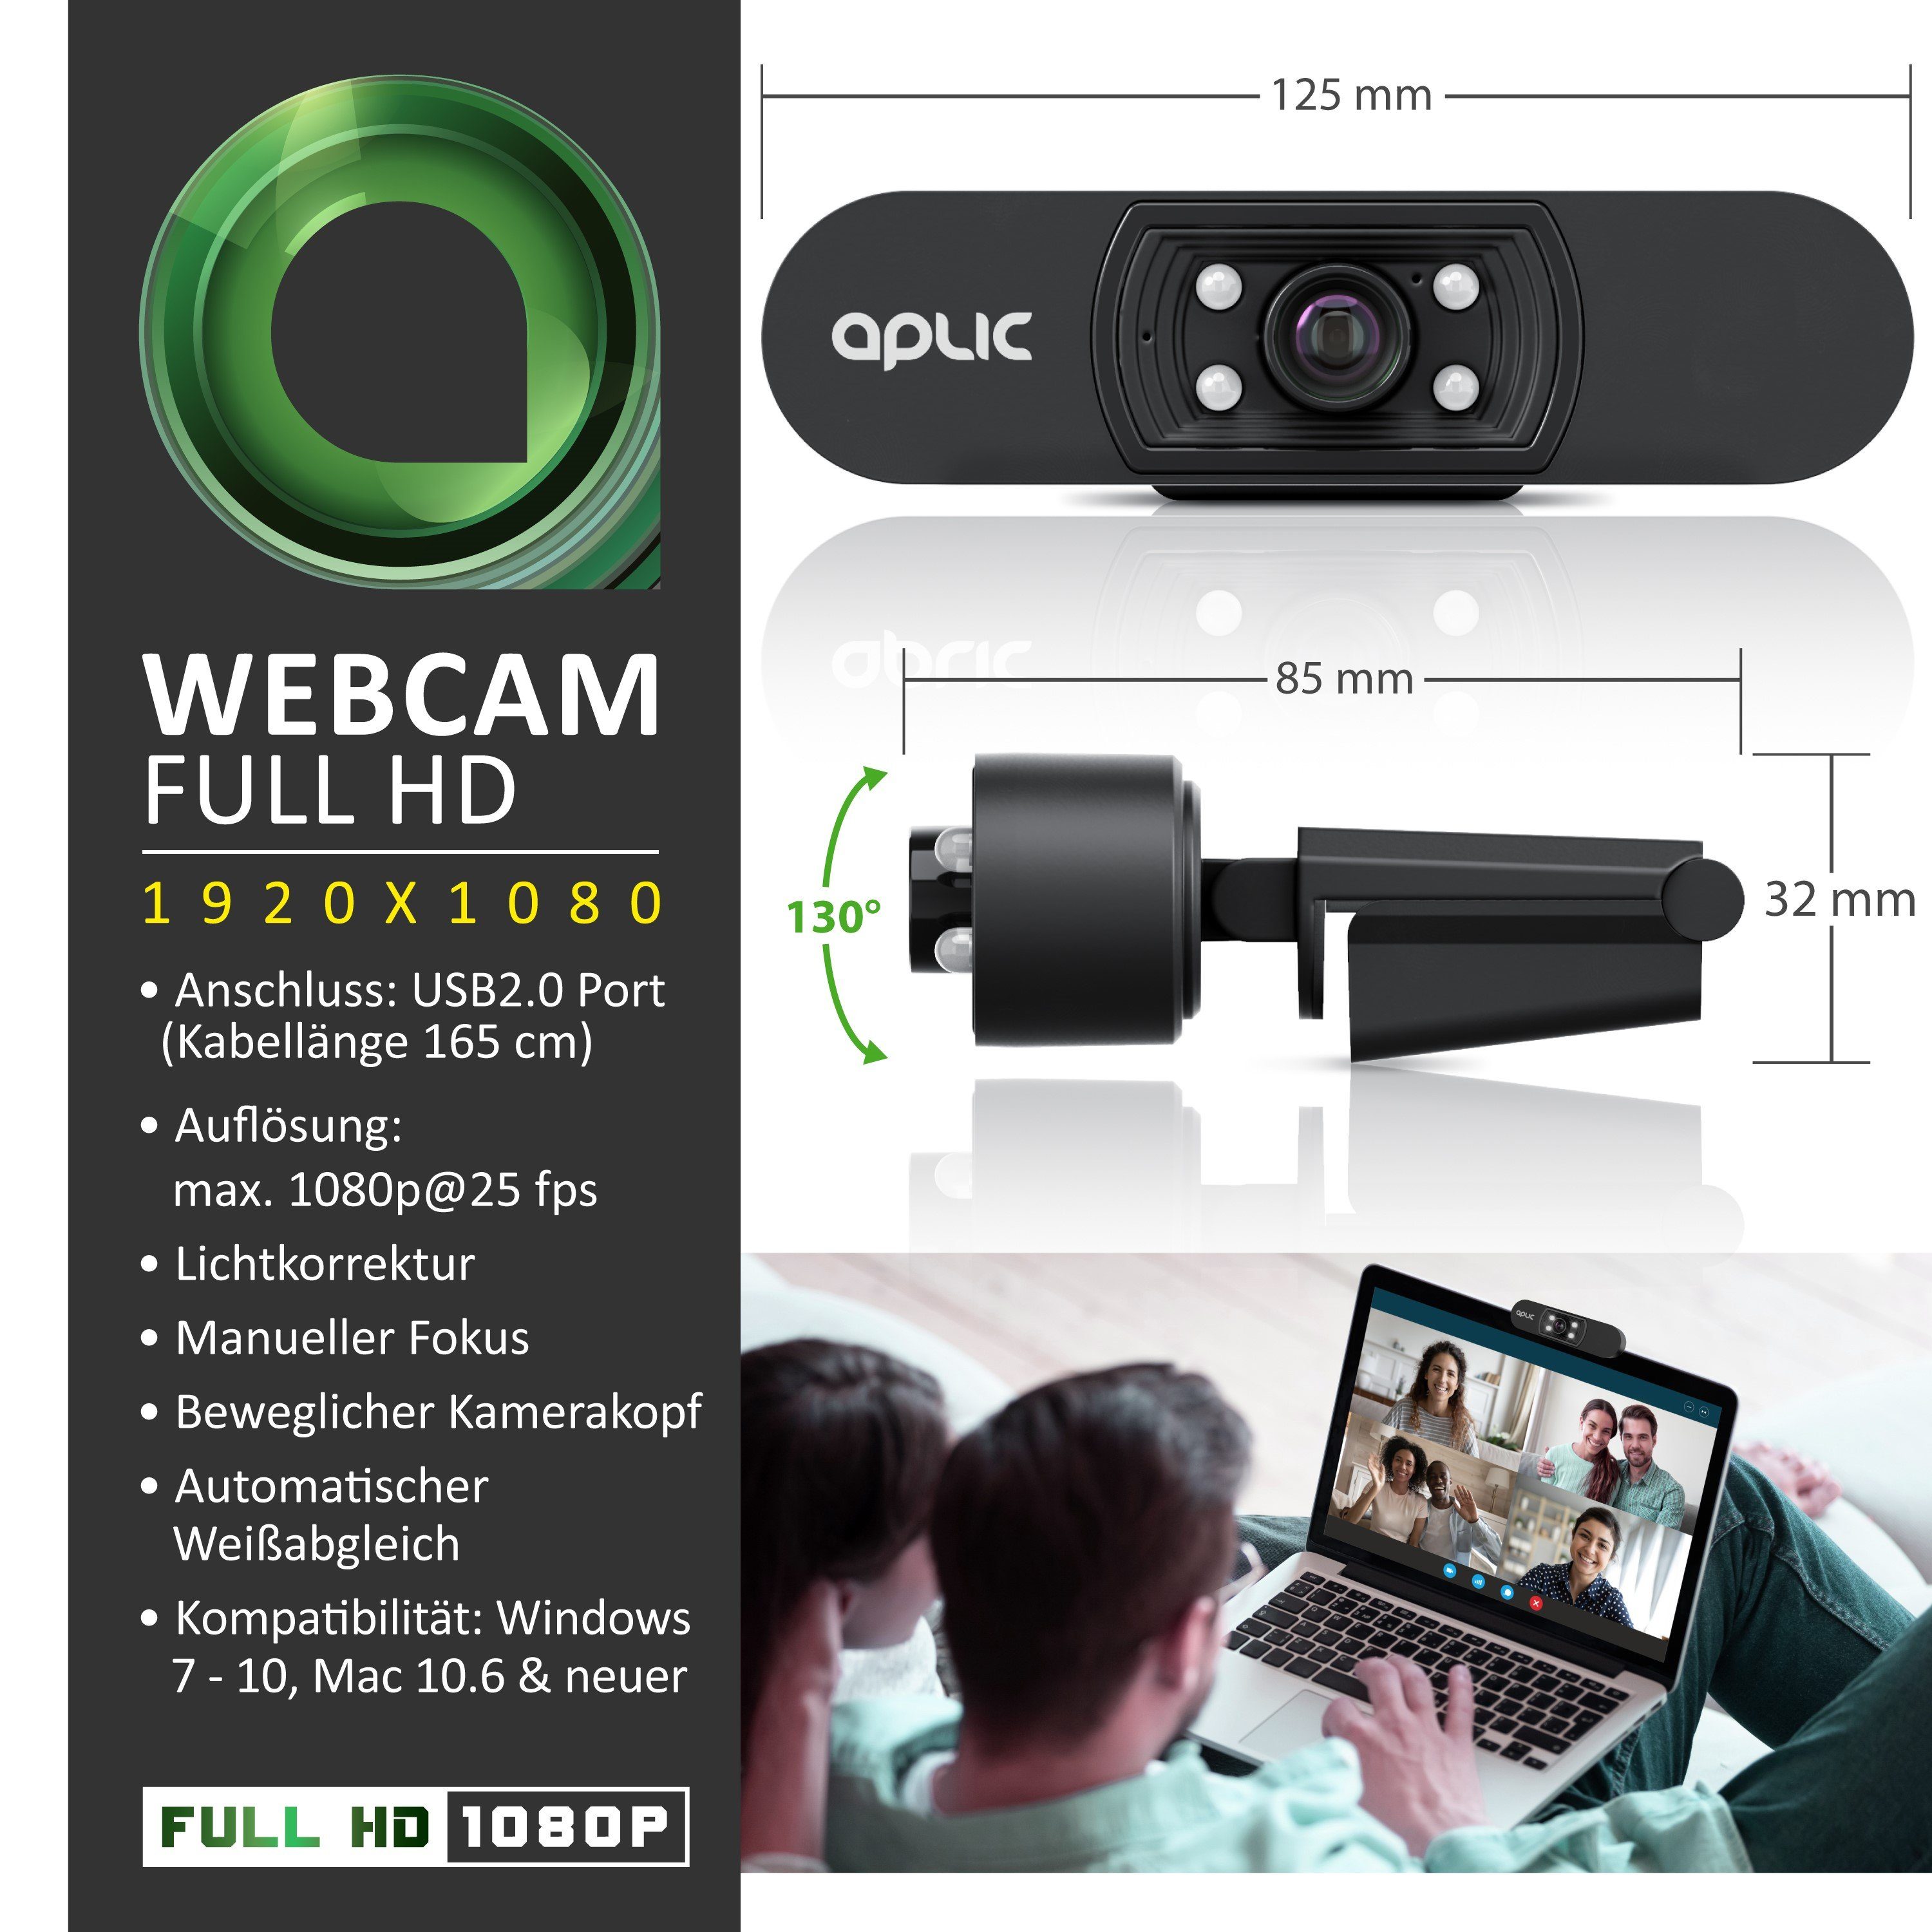 Aplic Full Hz, 1920x1080P Mikrofon) HD-Webcam Hilfslichter 25 @ (Full HD, 4 5P Szenelicht, / Linse